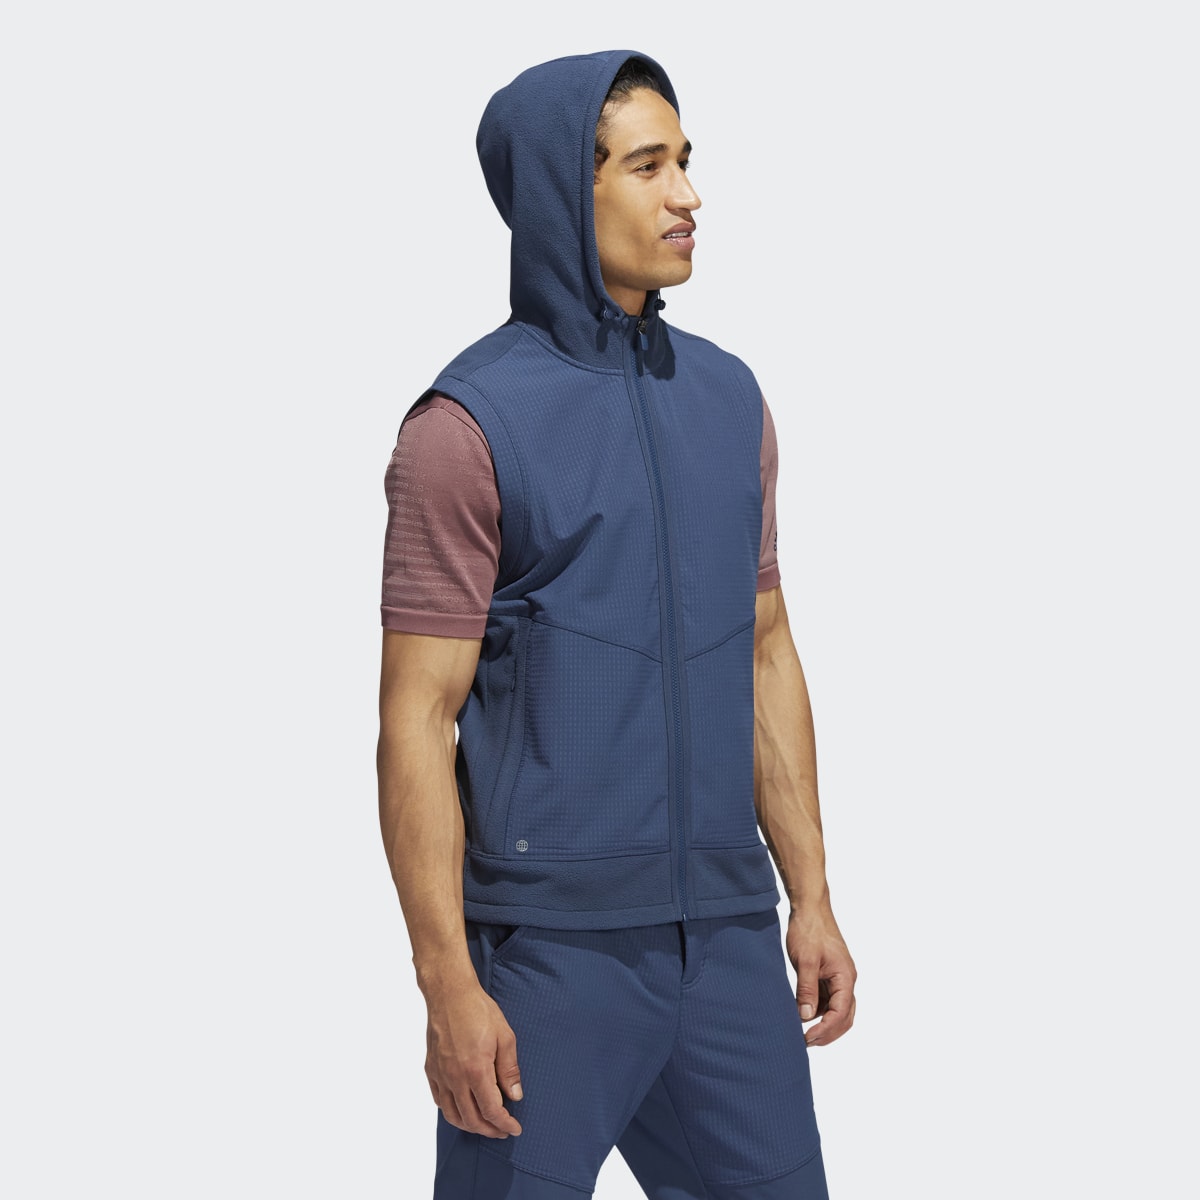 Adidas Statement Full-Zip Hooded Vest. 4